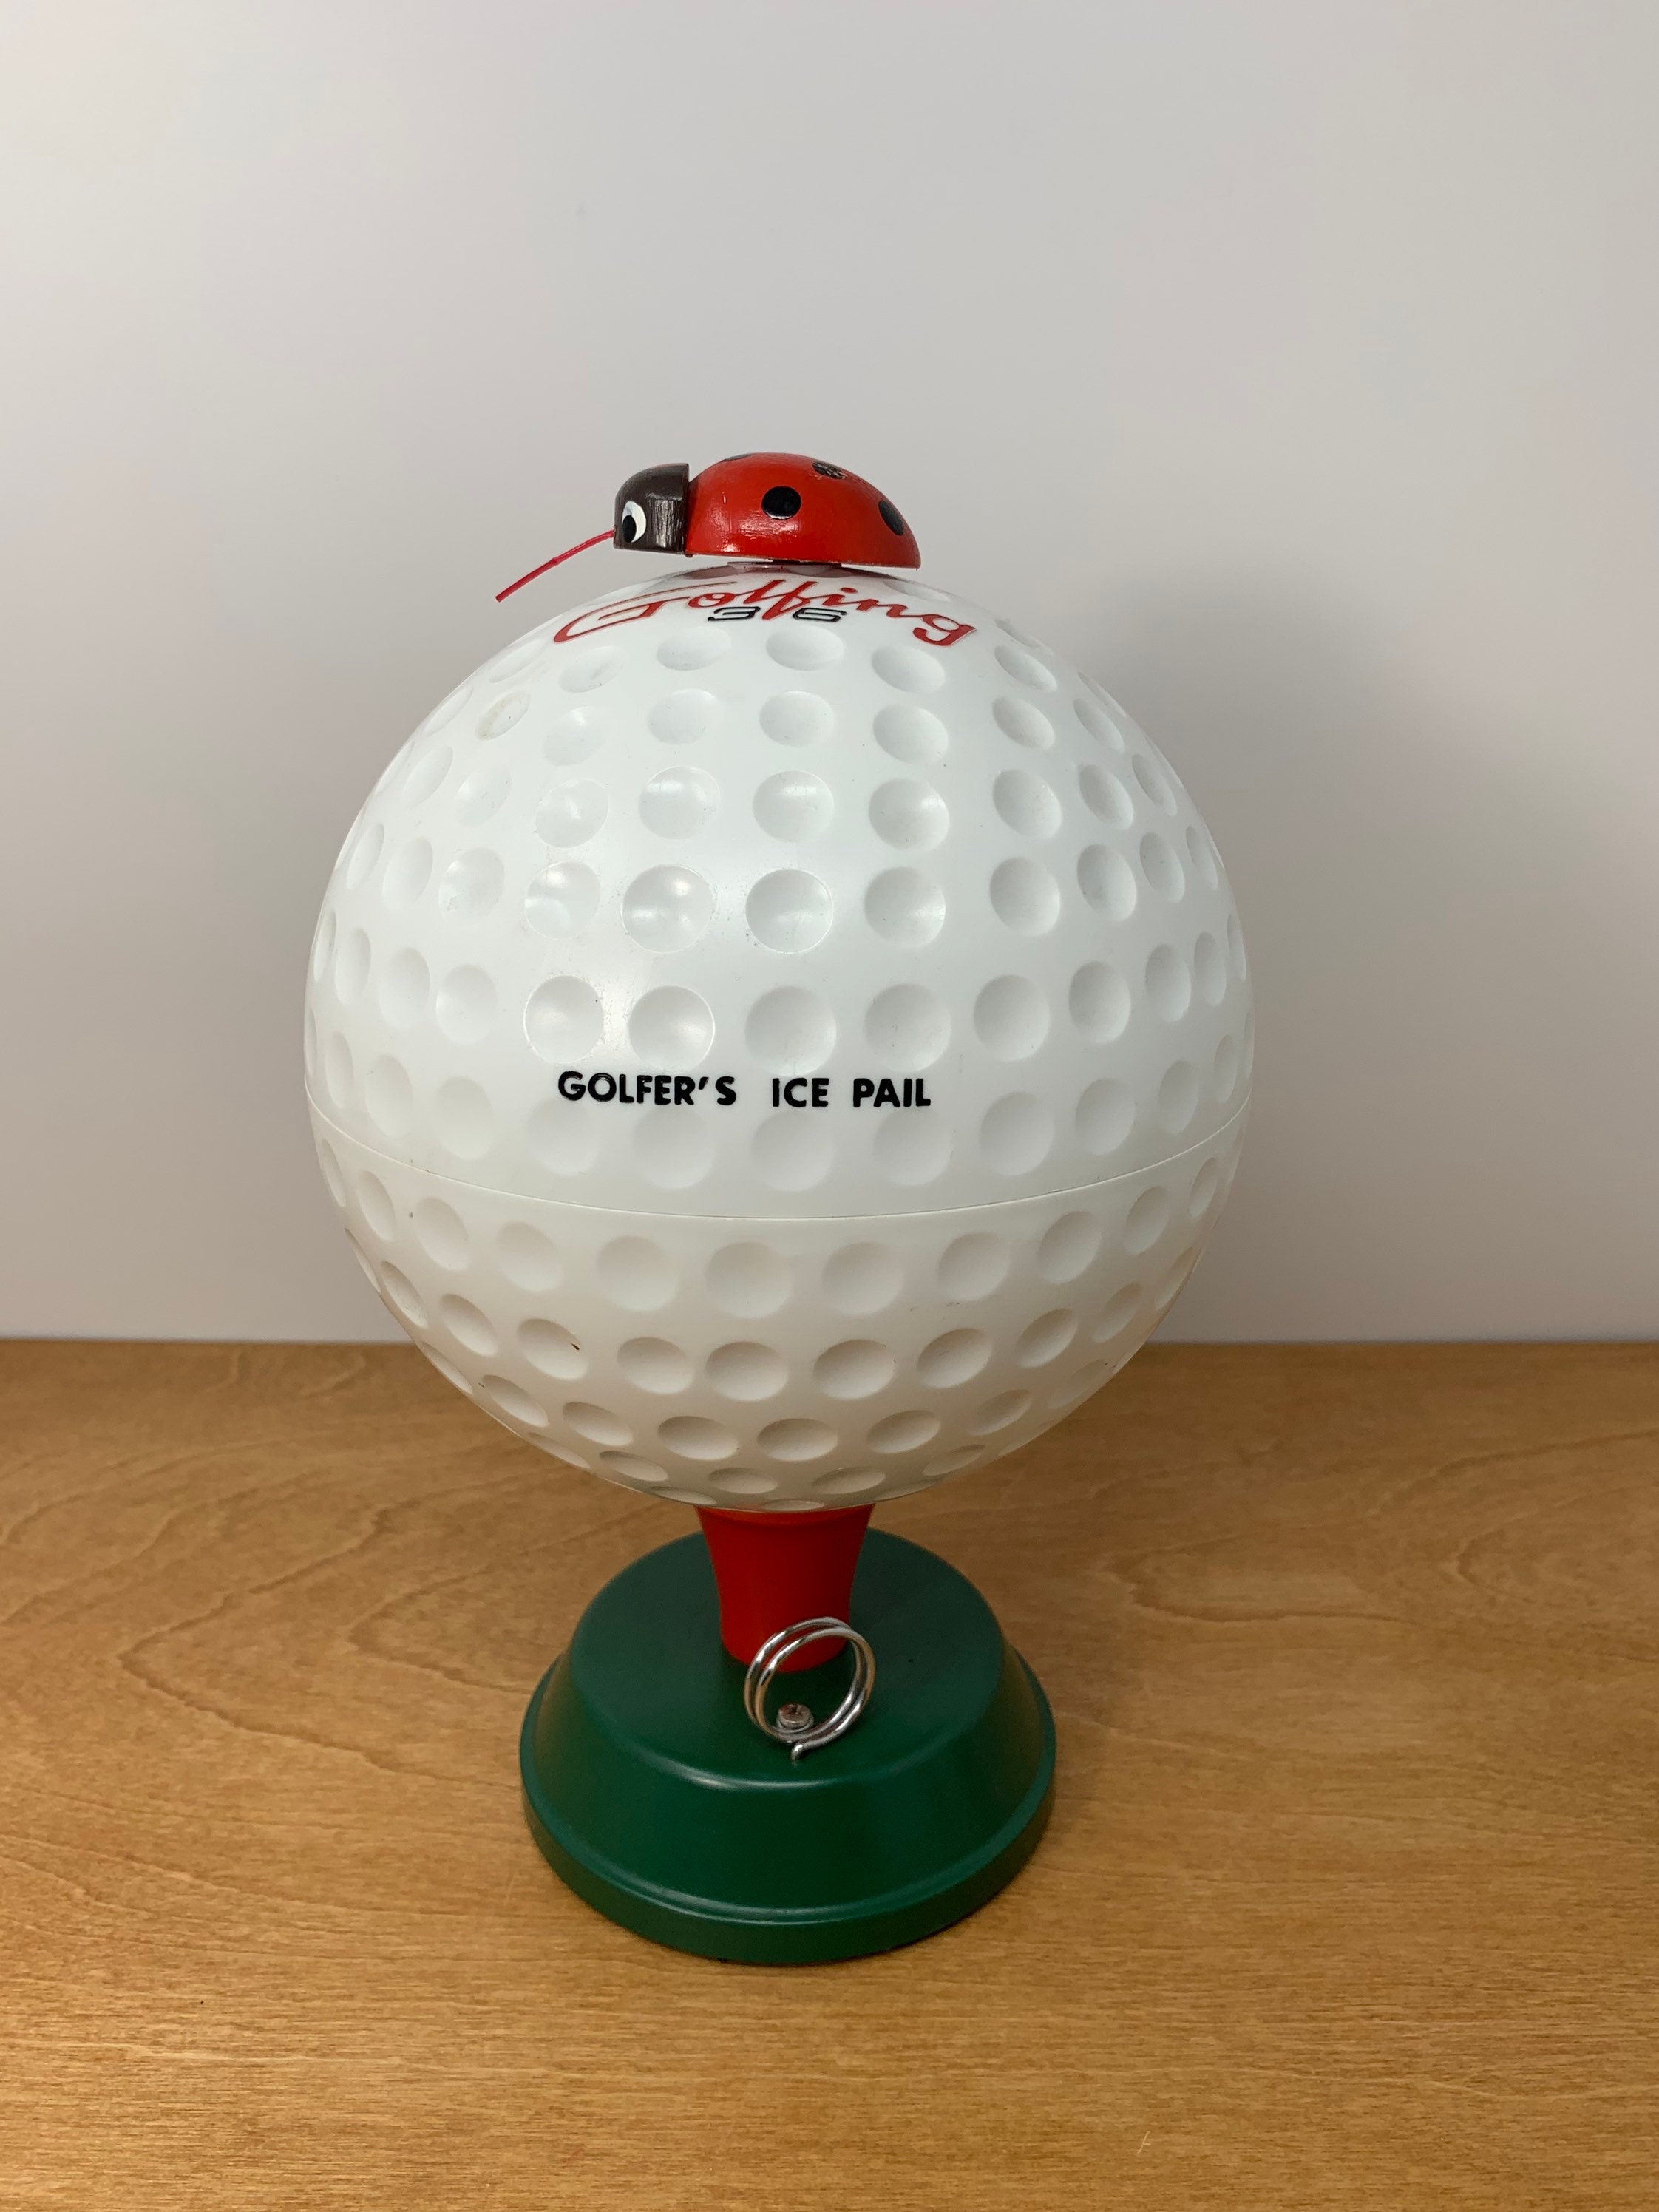 Golf Ball Ice Pail 1, Golf Ball on Tee, Ice Bucket, Red Bug Beetle